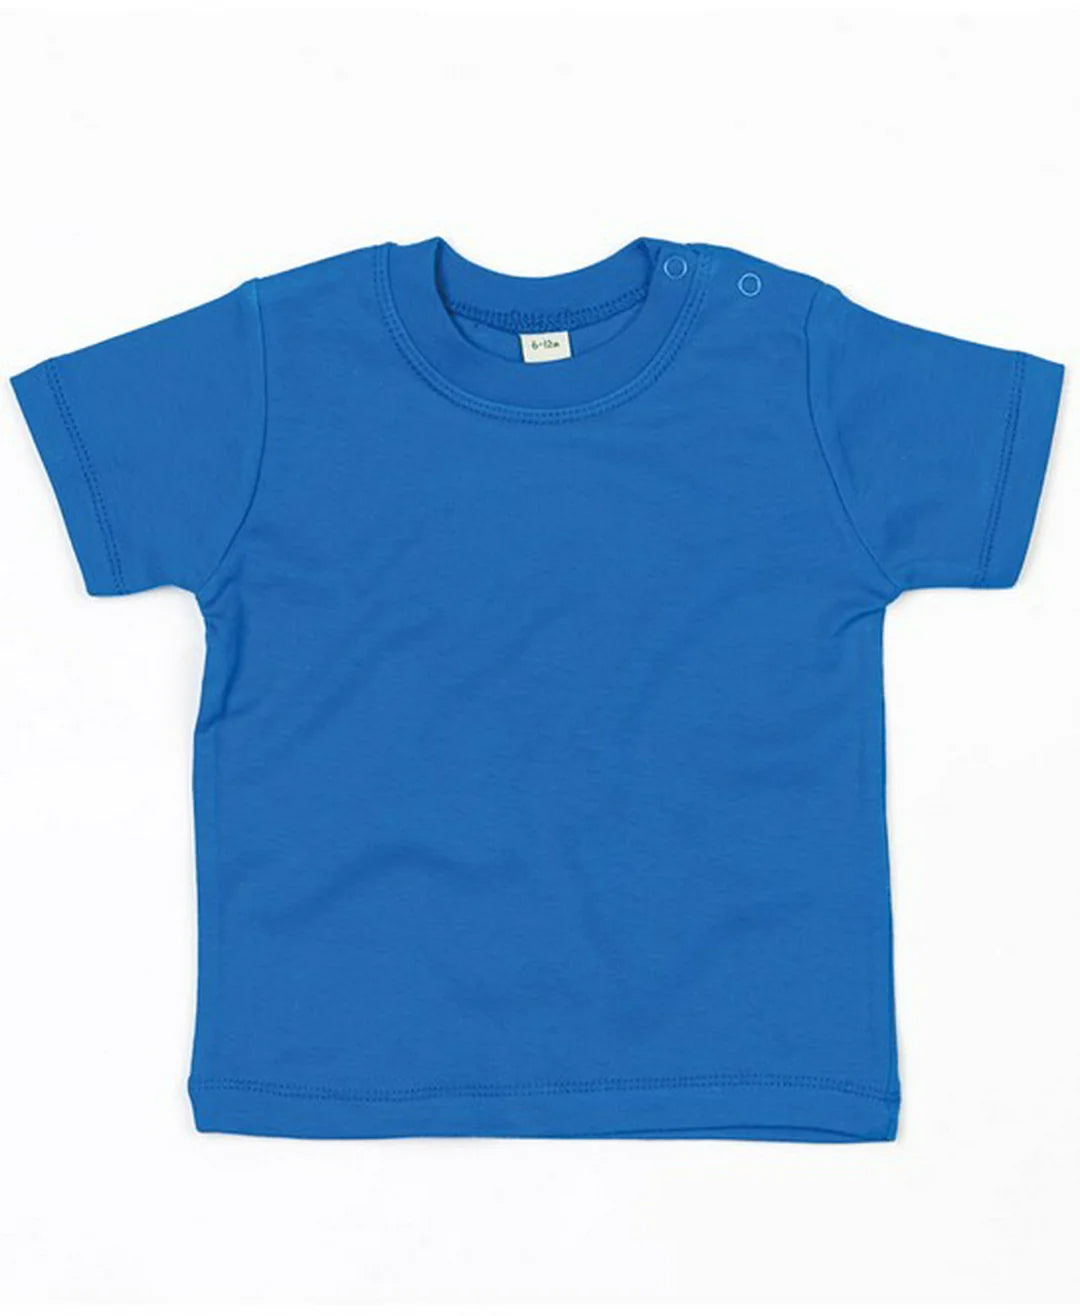 Babybugz Baby T-shirts Other color BZ02